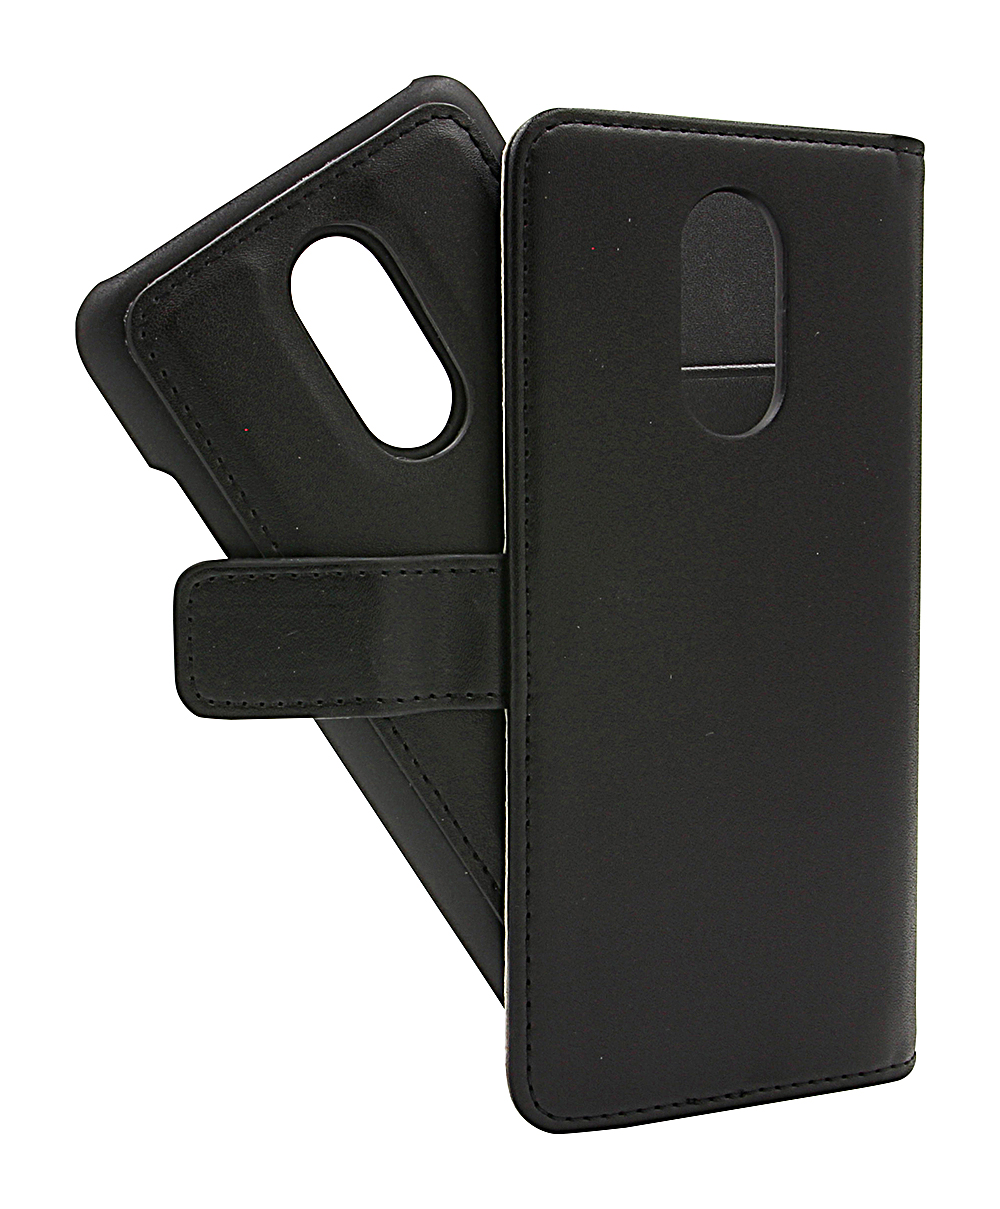 Skimblocker Magnet Wallet OnePlus 7